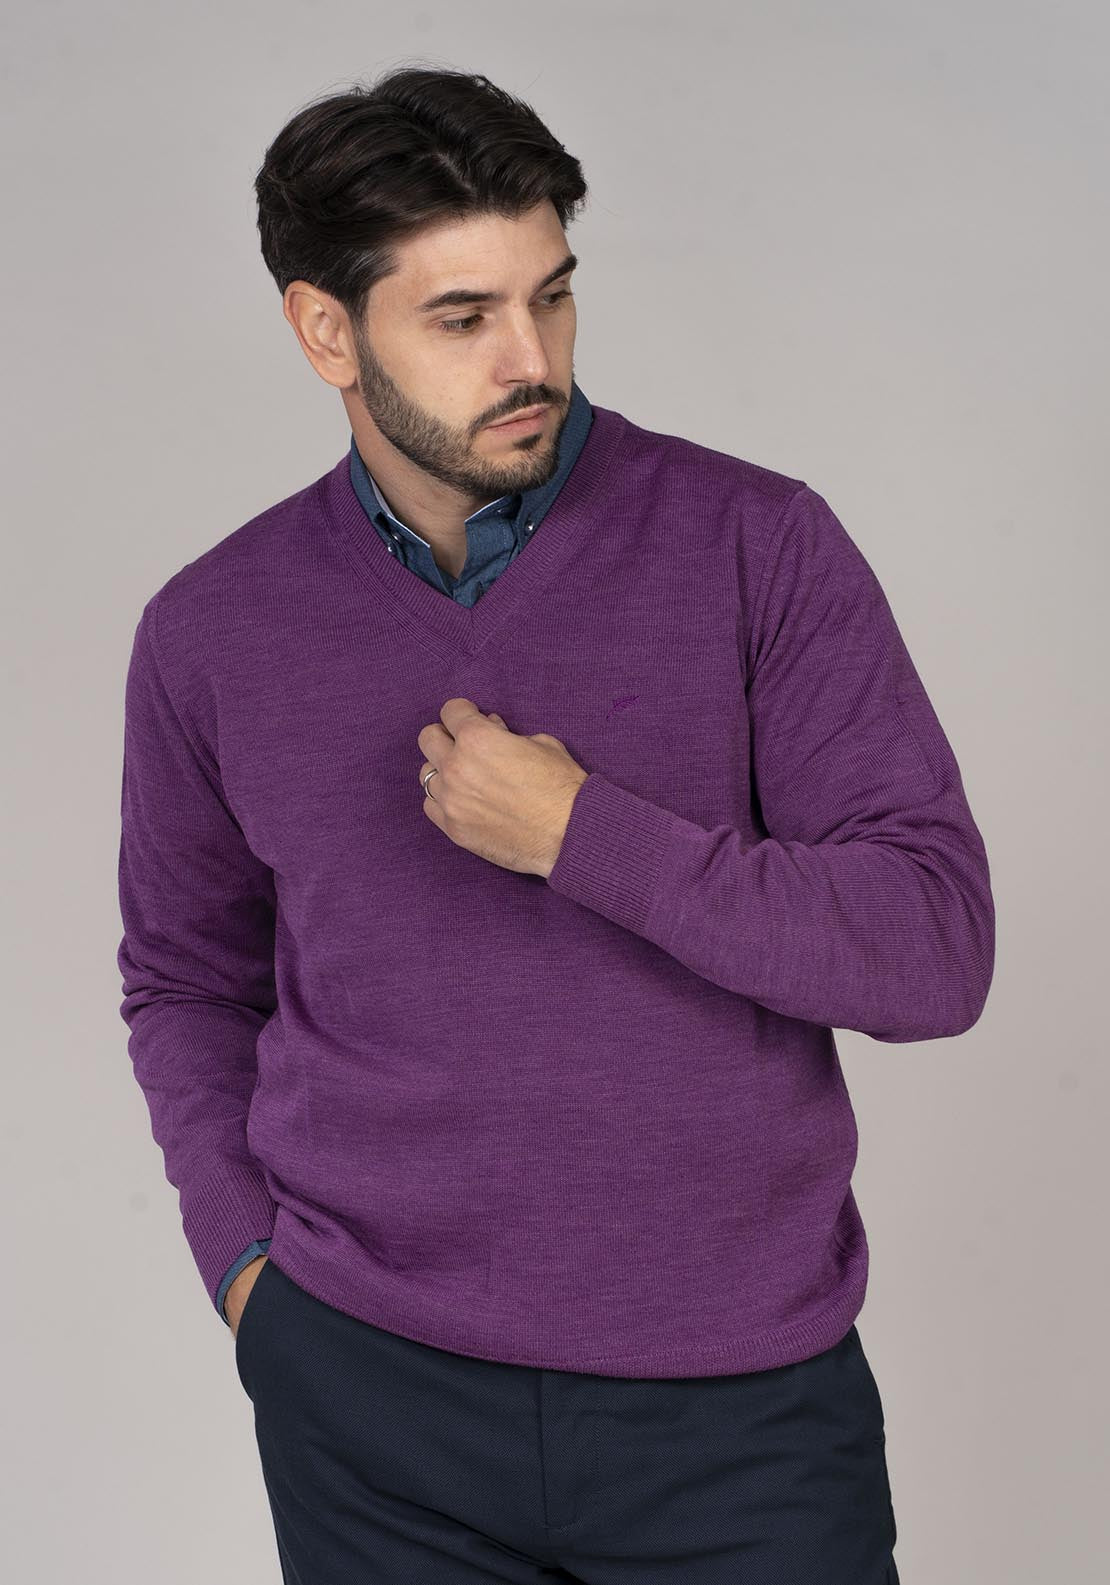 Yeats Plain V-neck Wool mix Sweater - Mauve 1 Shaws Department Stores